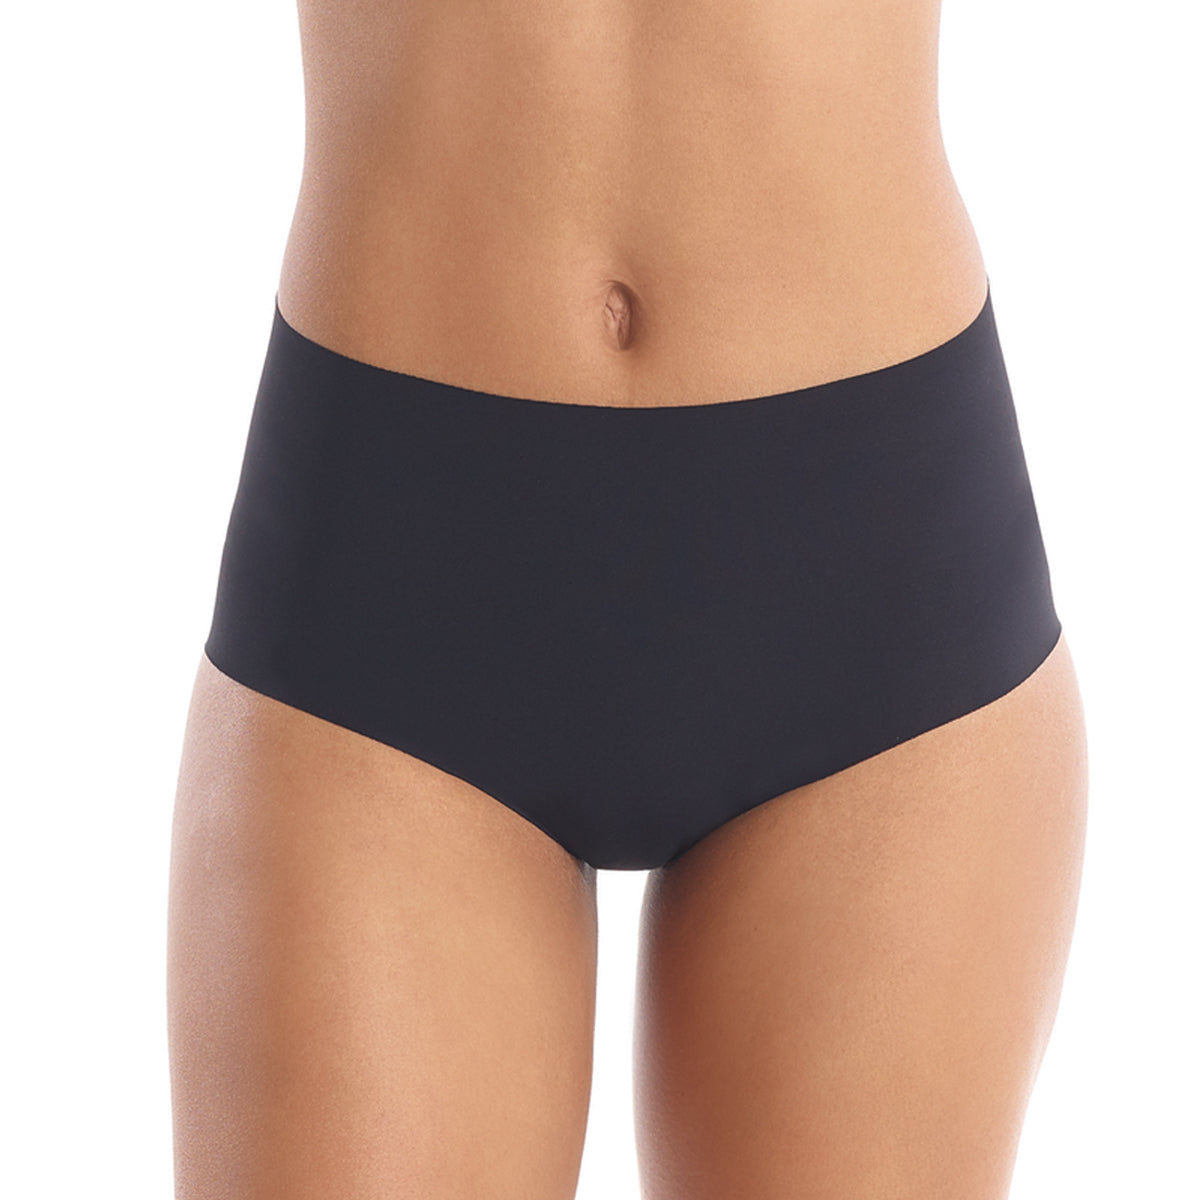 Commando brief black panty seamless underwear lingerie canada linea intima wearcommando